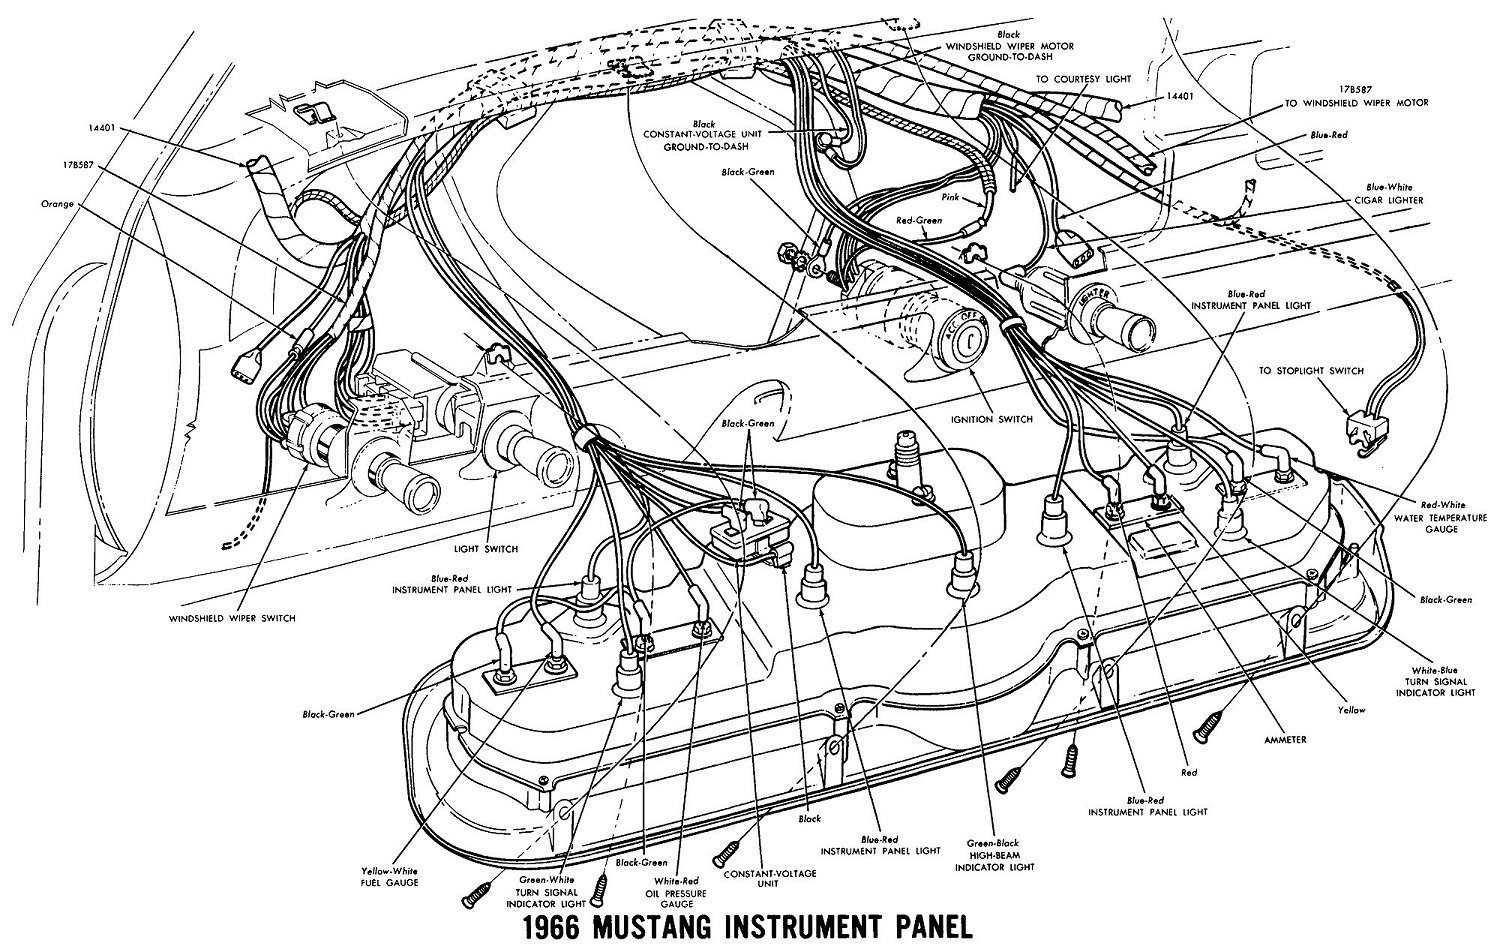 1966 Mustang Wiring Diagrams - Average Joe Restoration - 1966 Mustang Wiring Diagram